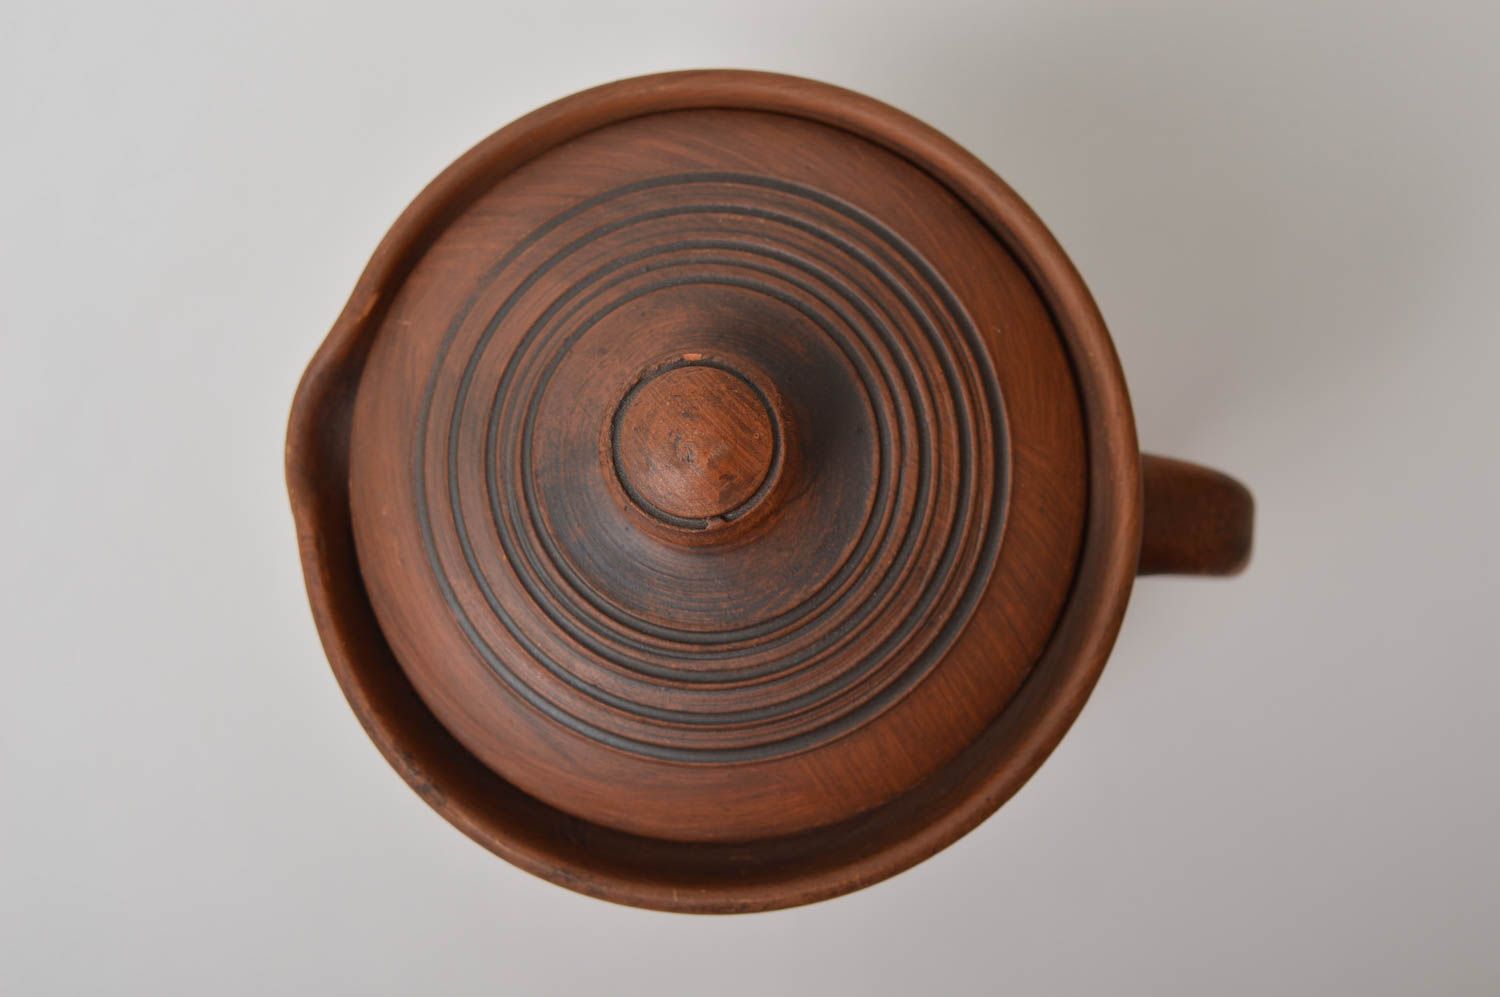 12 oz ceramic small handmade pitcher in village classic style 1 lb photo 3